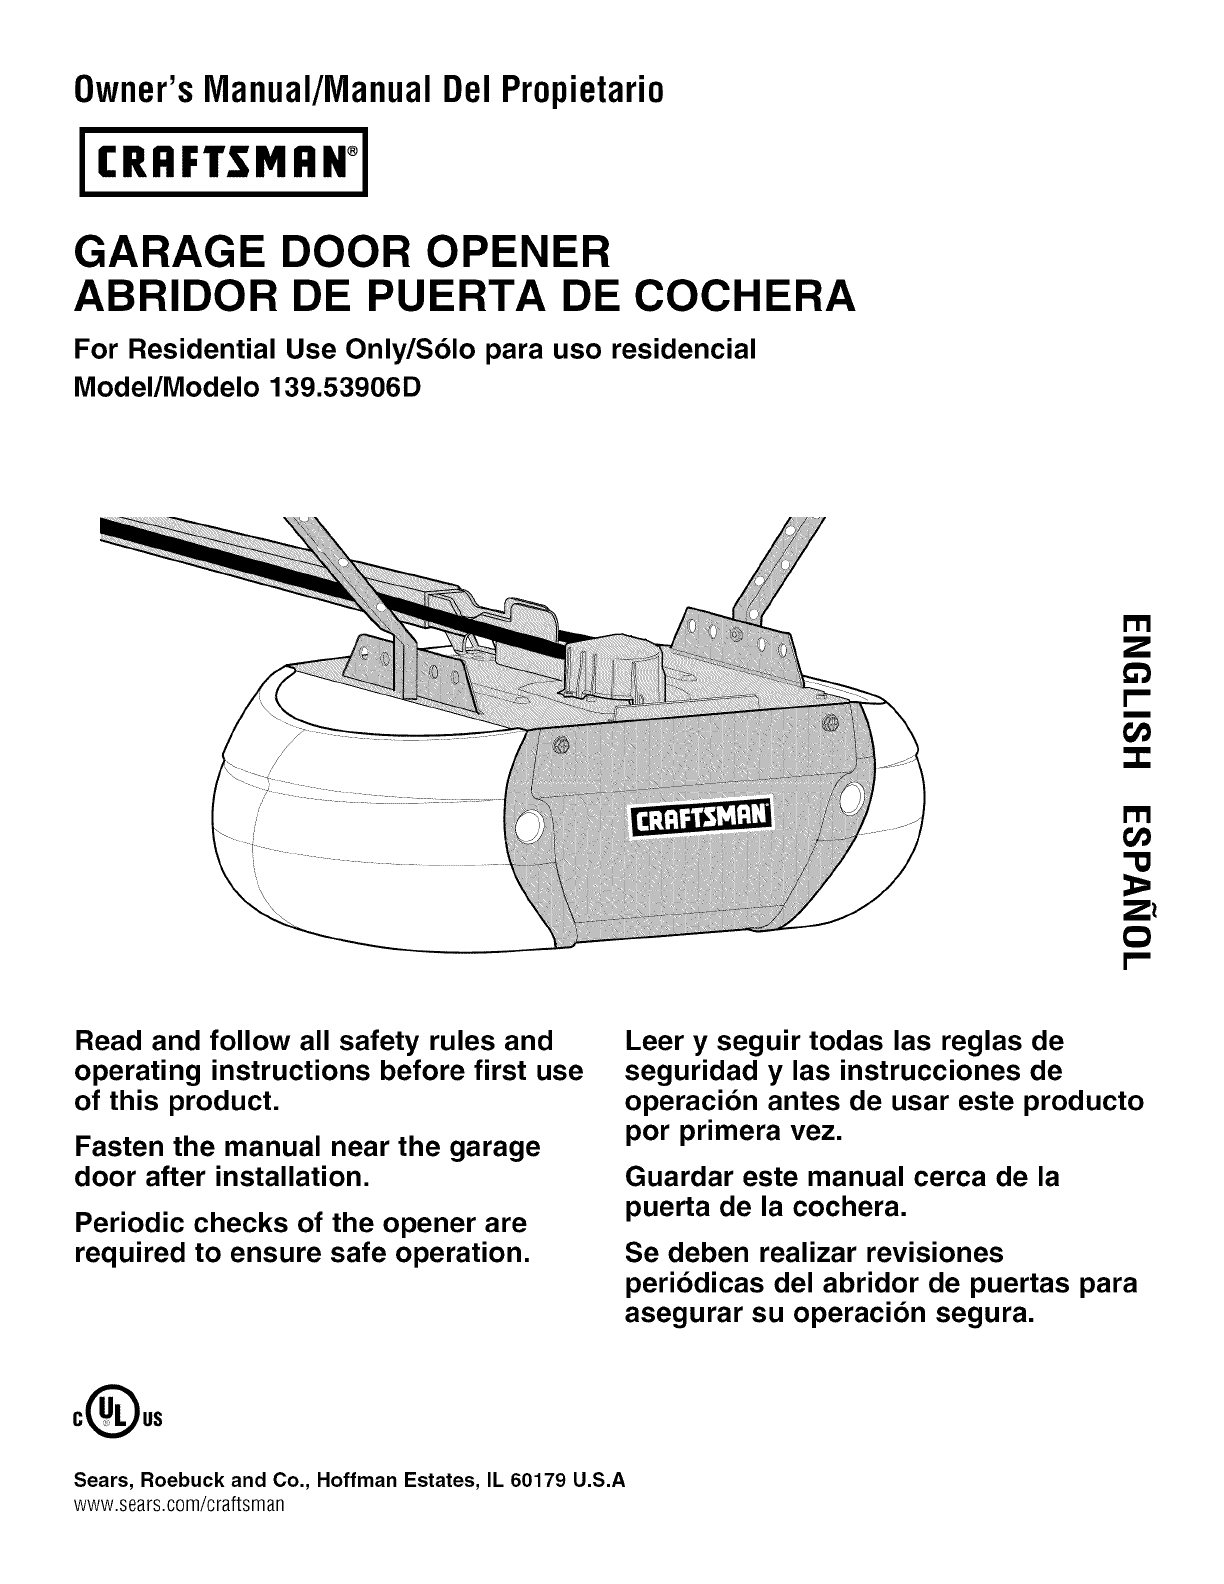 Craftsman Garage Door Opener Manual 41db102 2 - Bios Pics